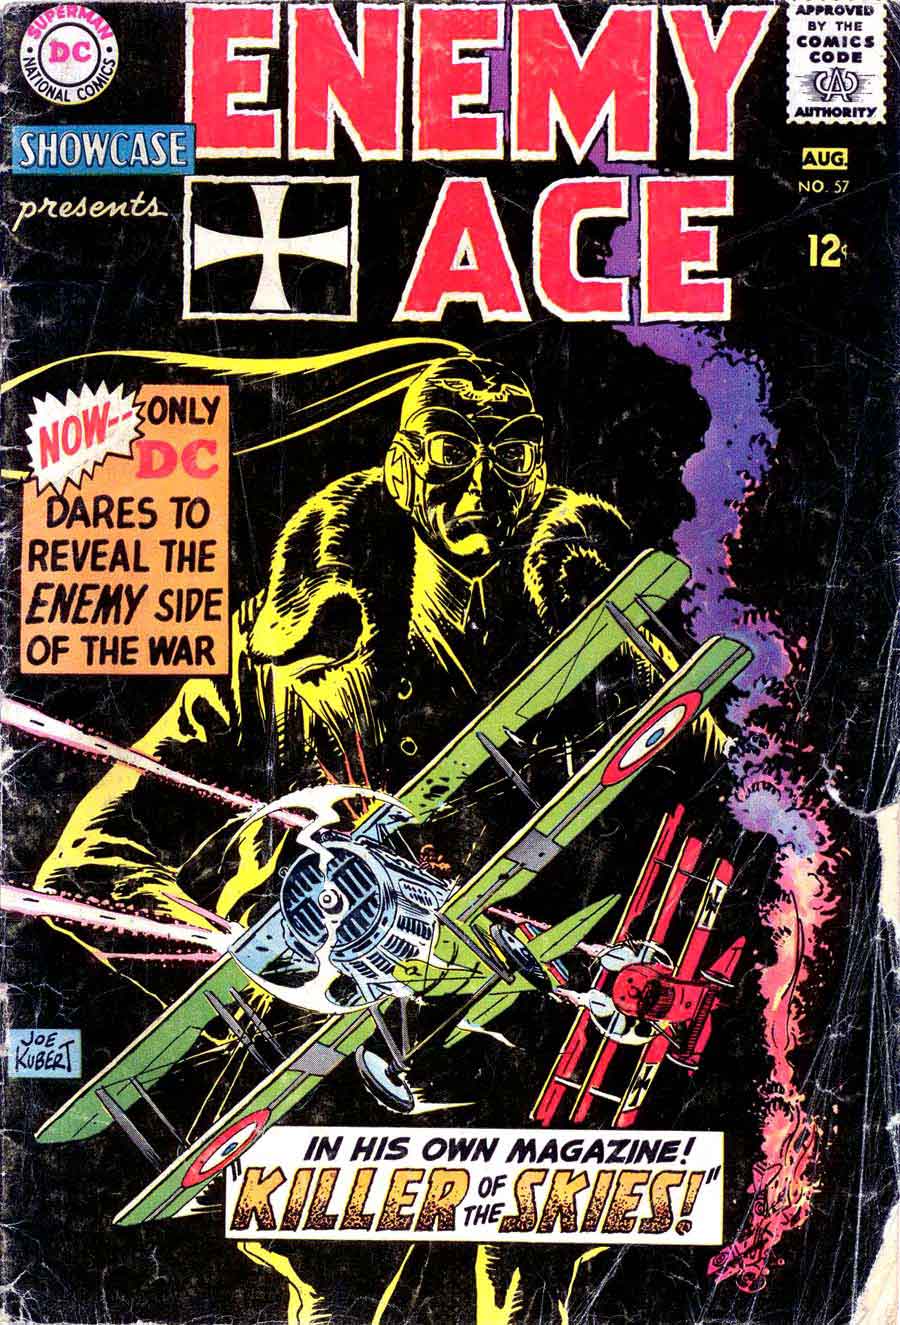 Showcase v1 #57 Enemy Ace dc comic book cover art by Joe Kubert